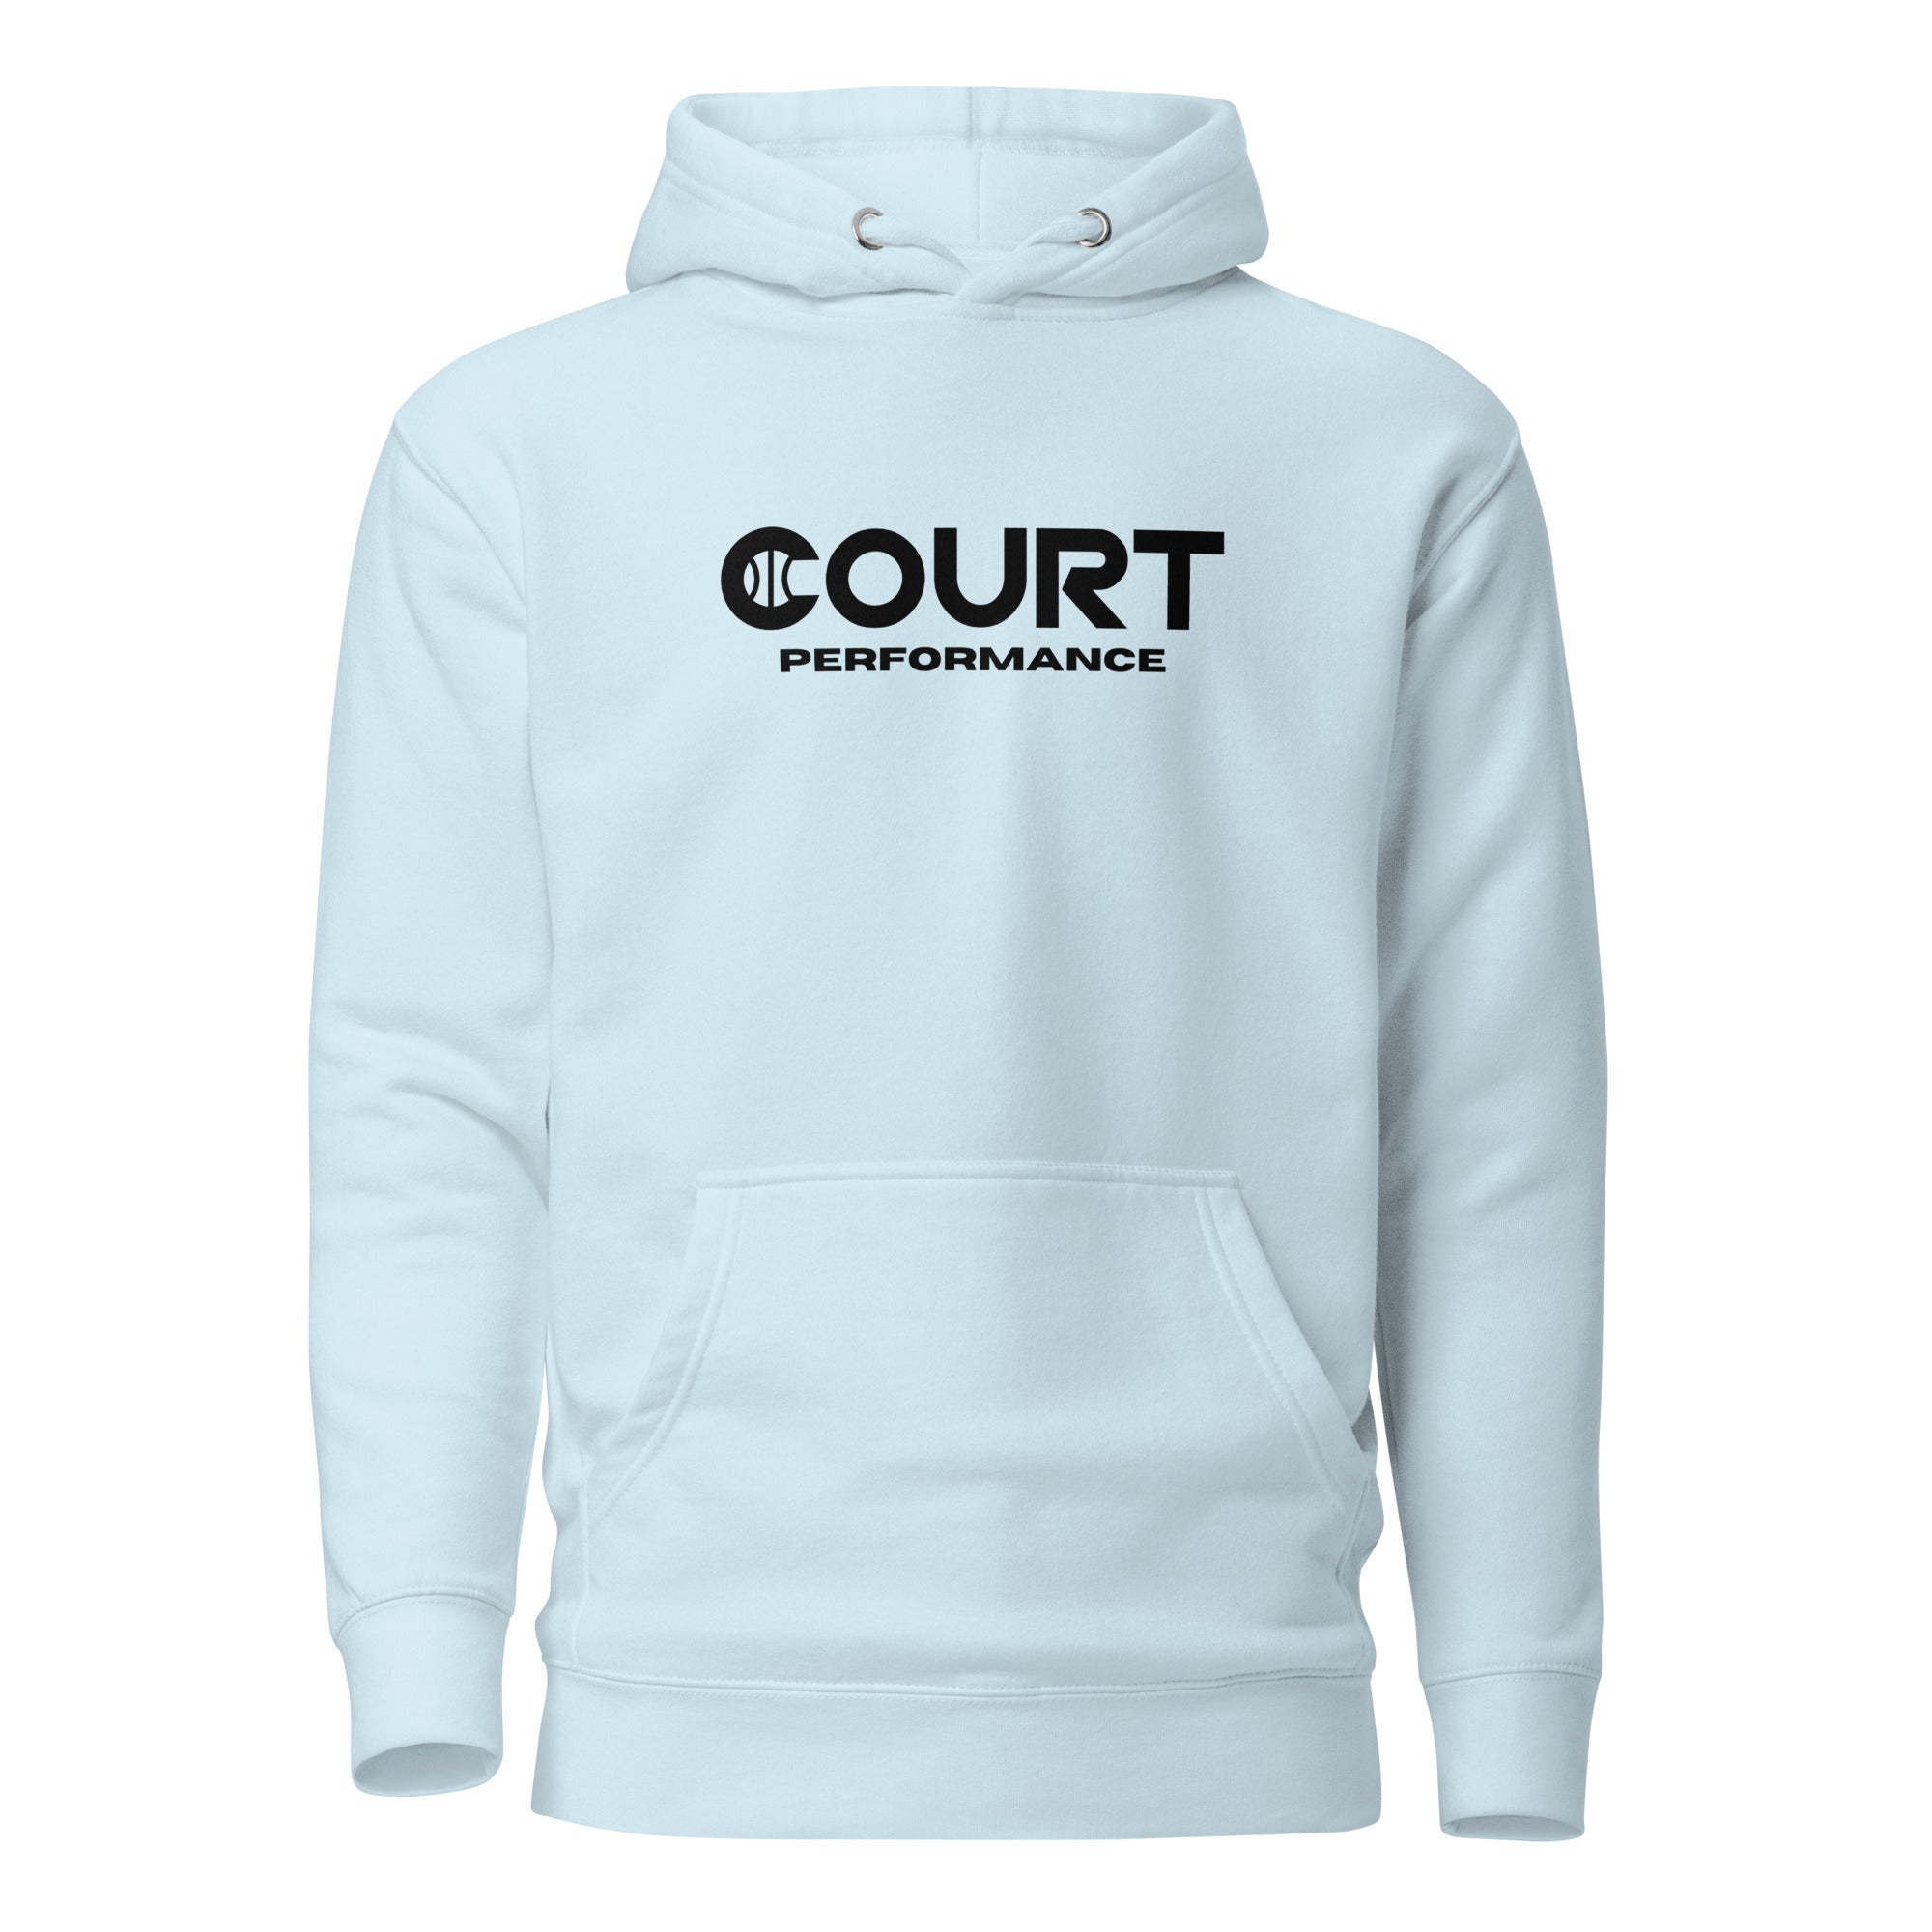 Court Performance - felpa con cappuccio unisex - Sky blue /Dusty rose